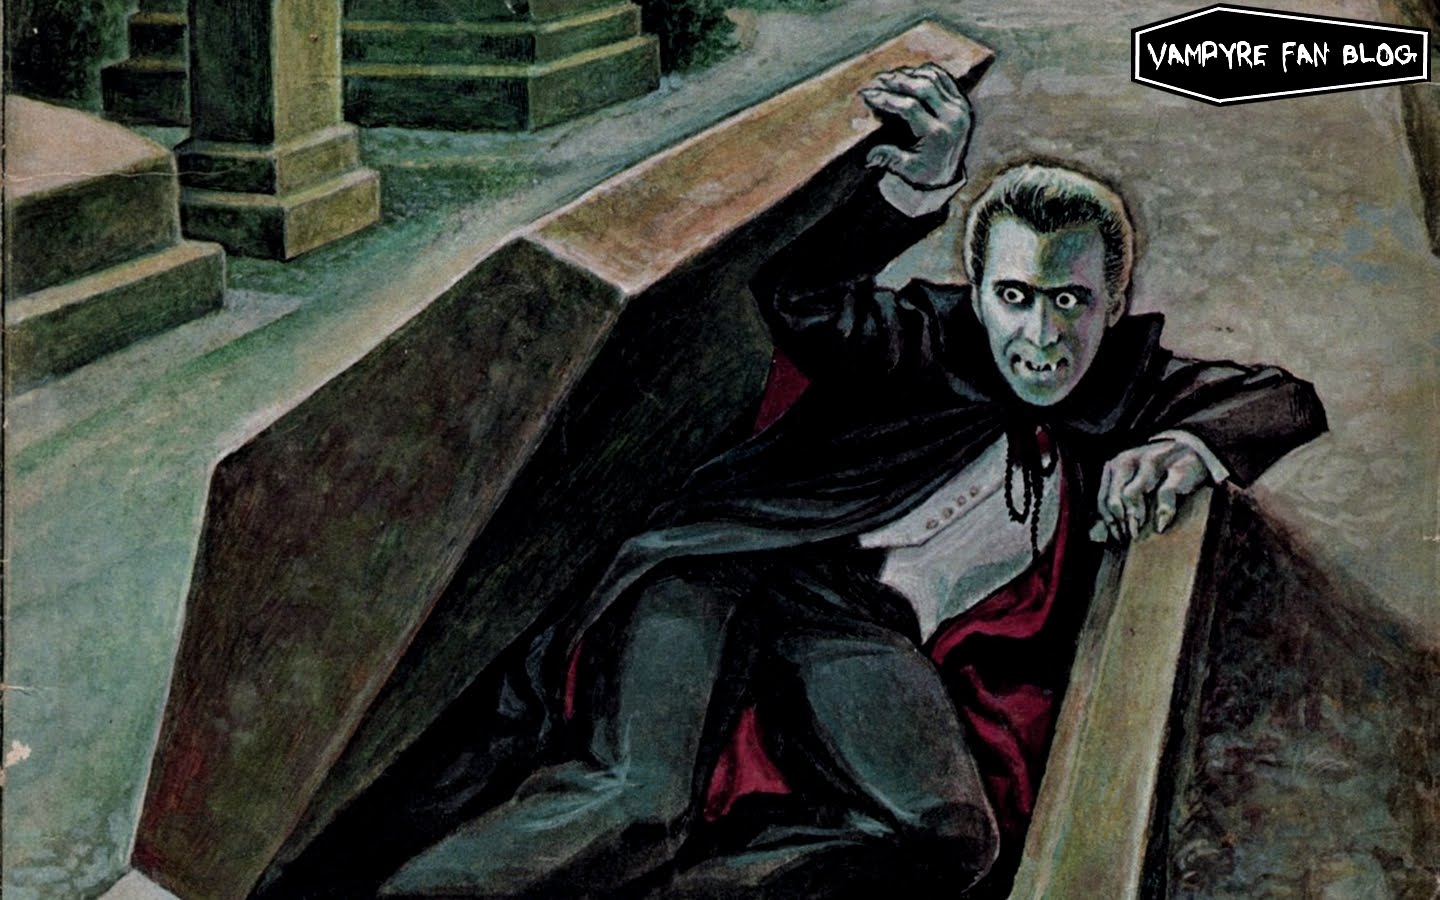 Vampyre Fan: Wacky Wallpaper Wednesday! MONSTER MOVIE